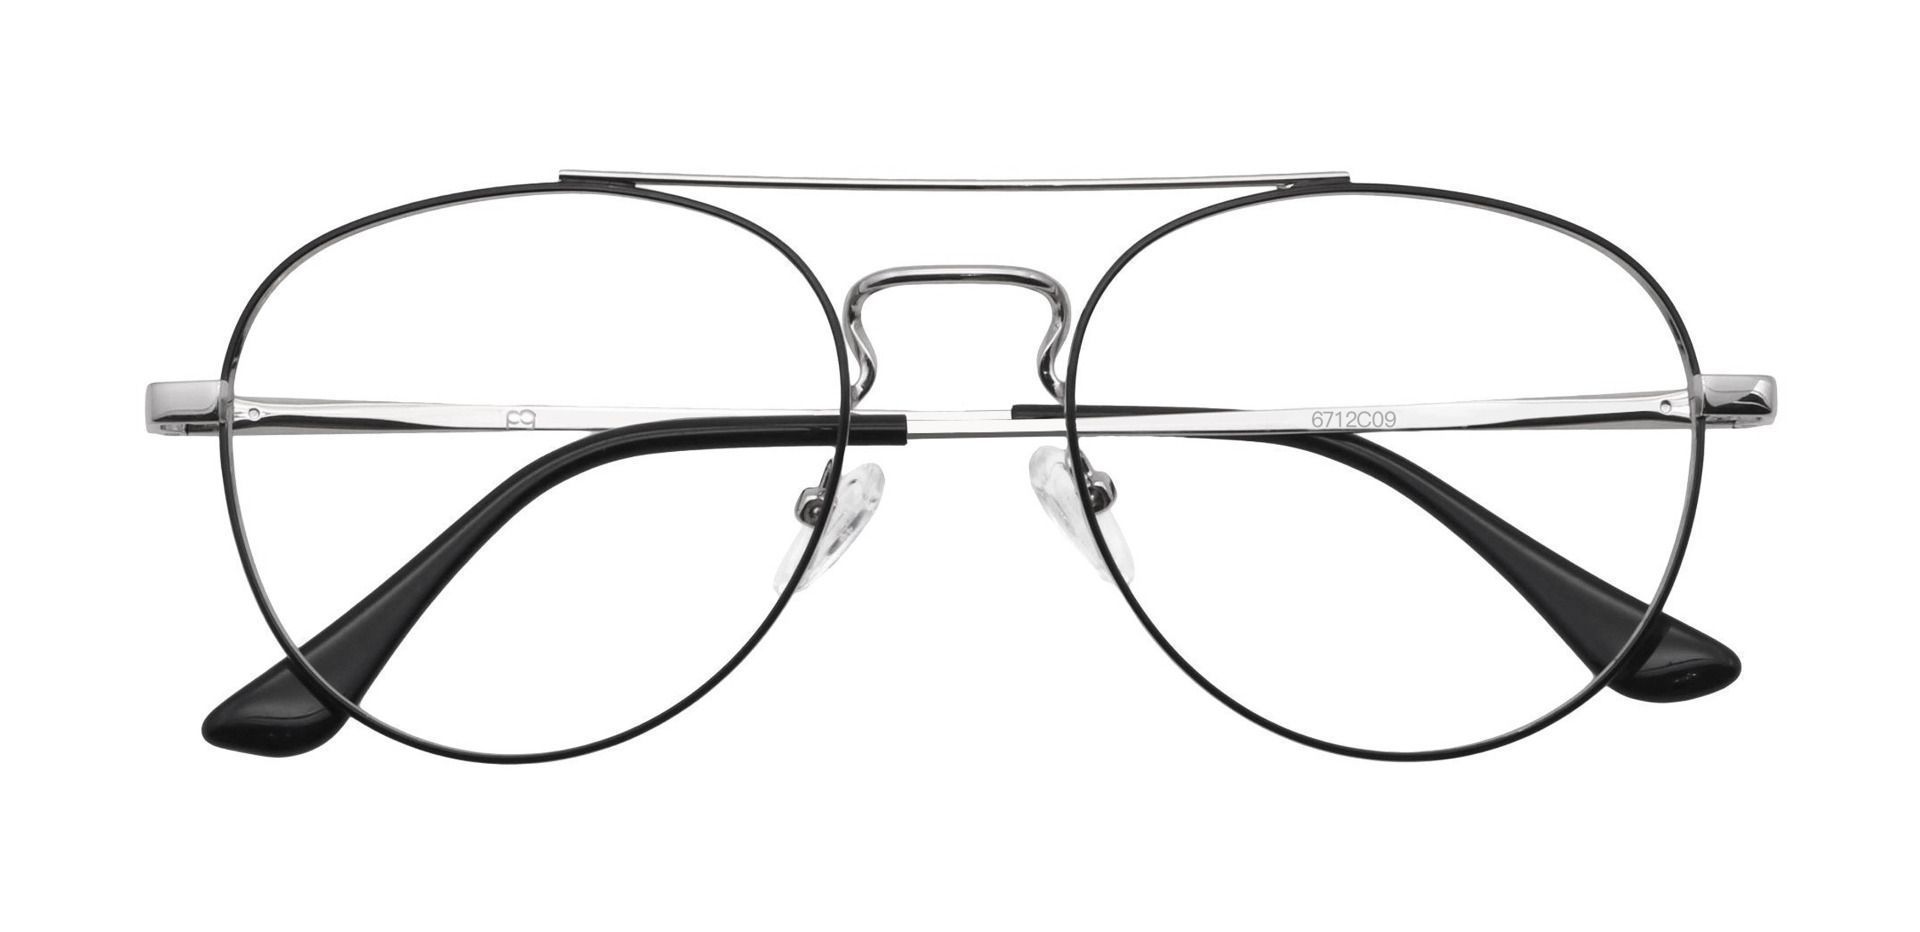 Trapp Aviator Eyeglasses Frame - Gray